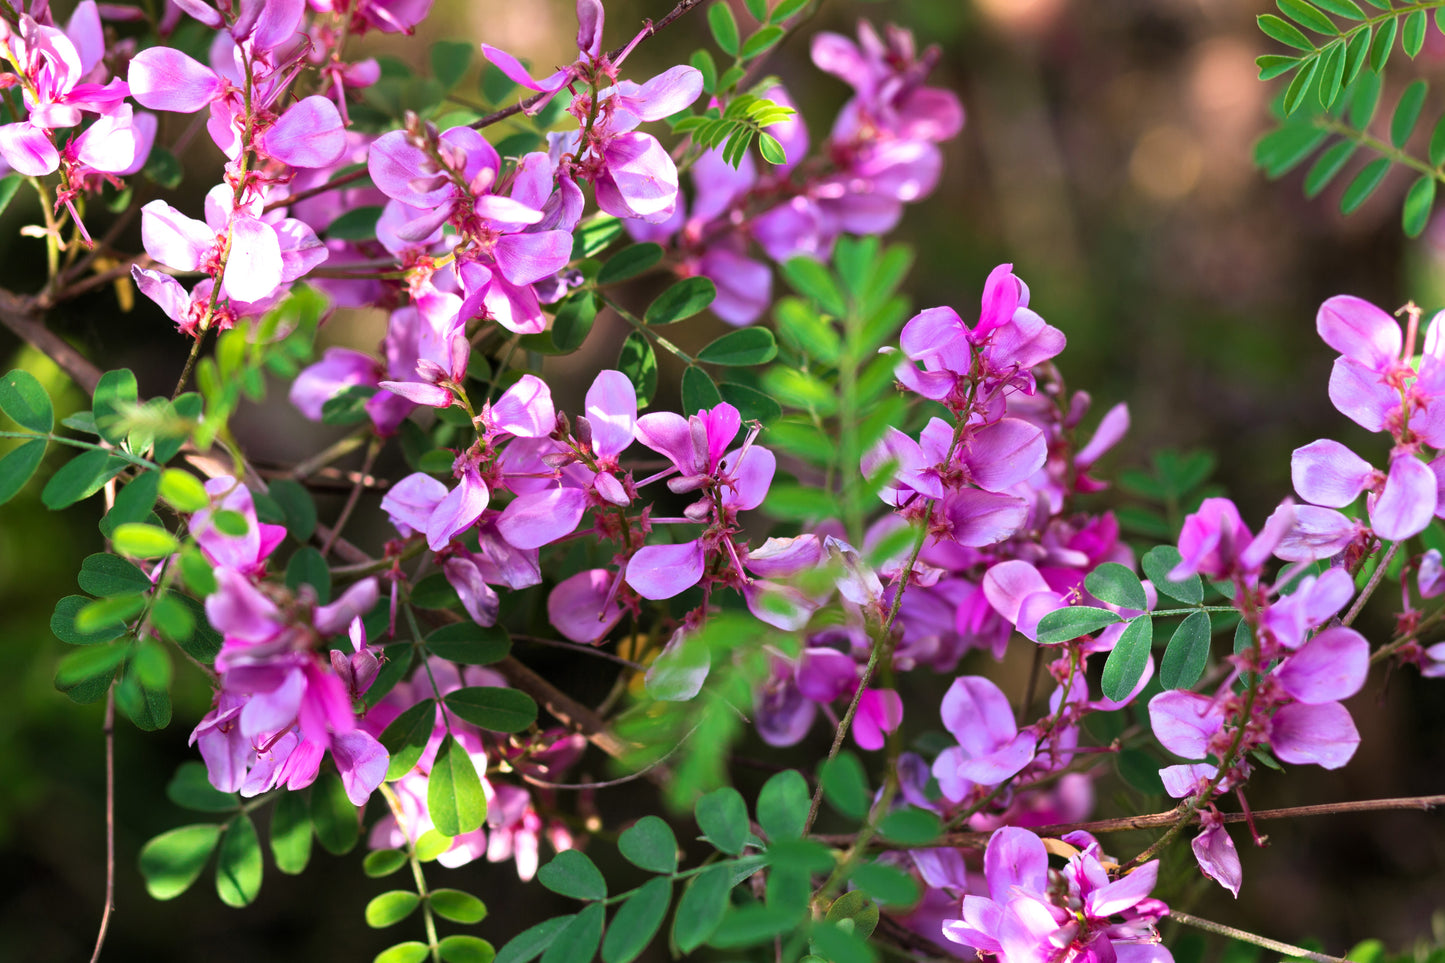 50 TRUE INDIGO Dye Indigo Indigofera Tinctoria Pink Purple Sub Shrub Flower Seeds